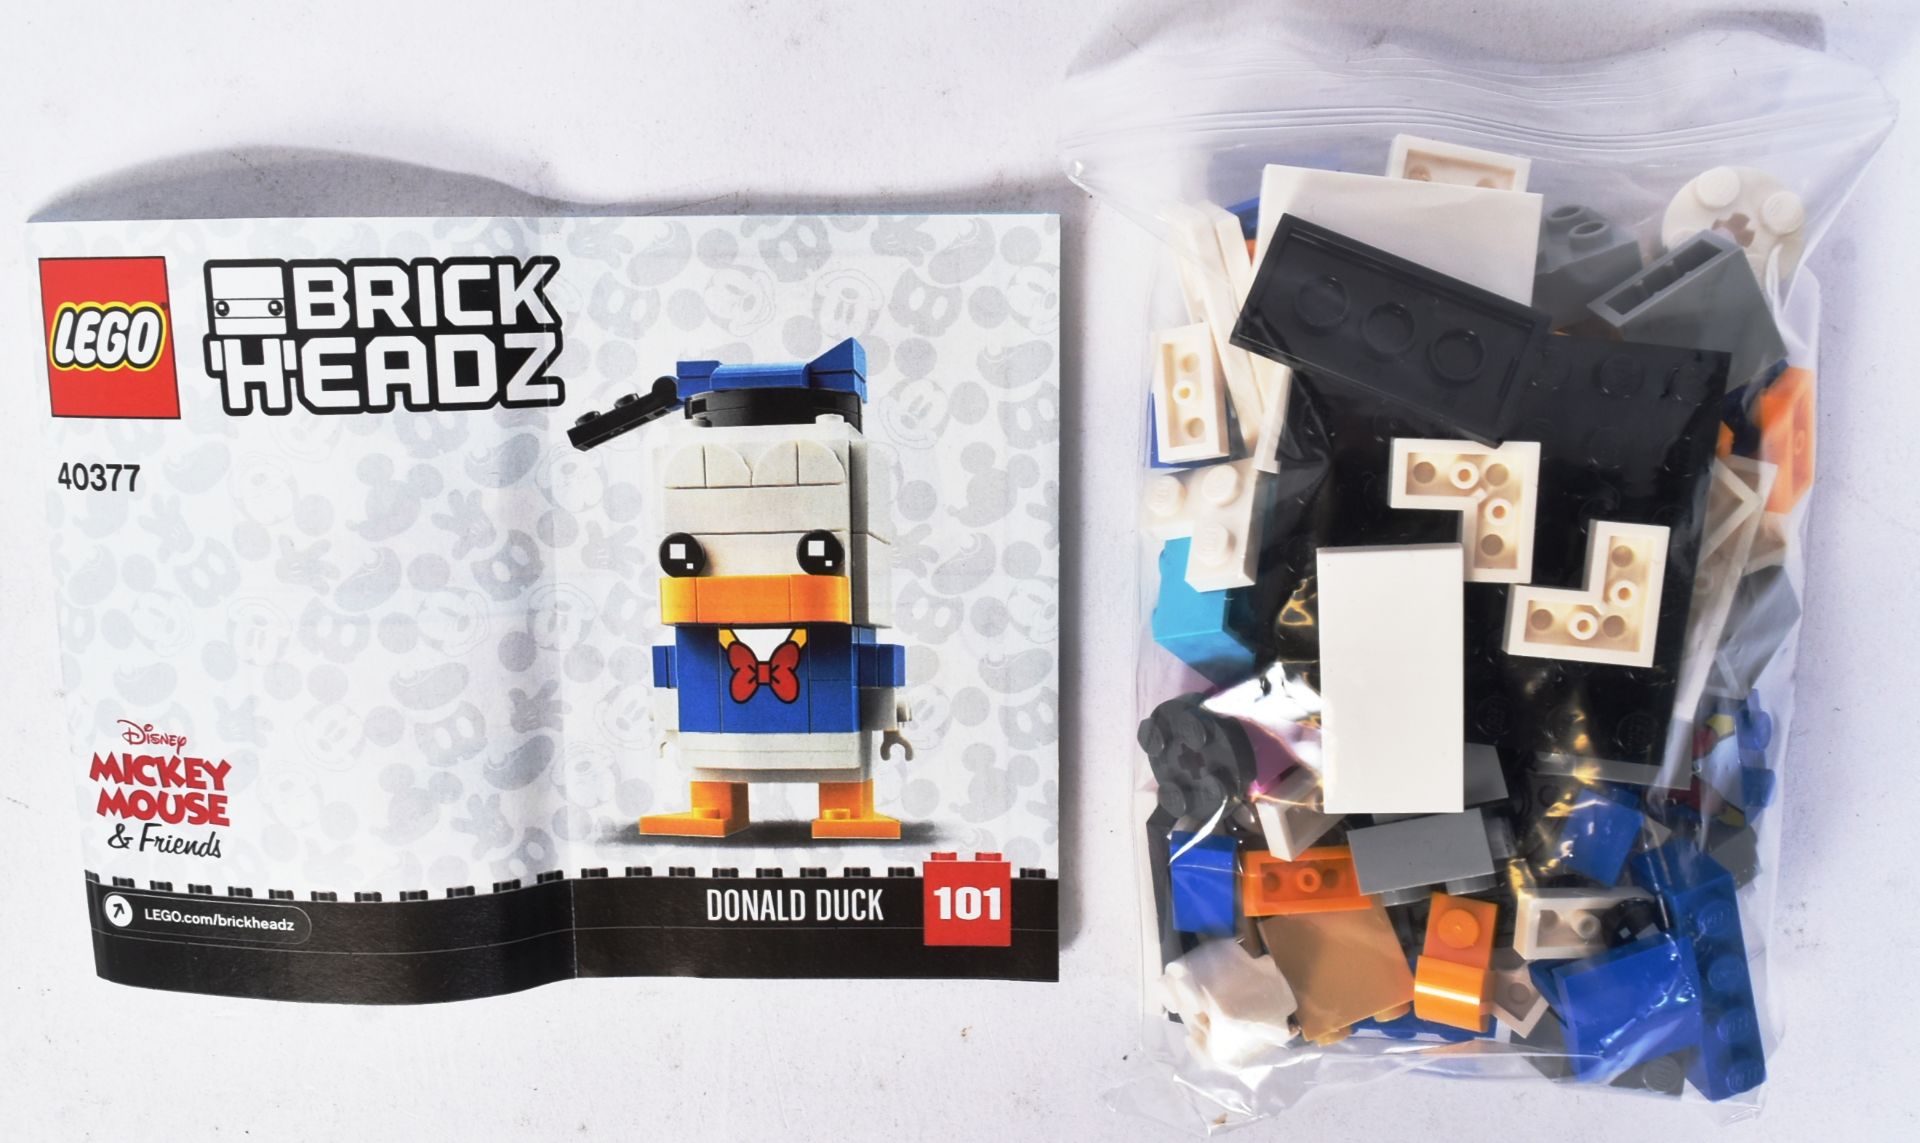 LEGO - BRICKHEADZ - DONALD DUCK, PLUTO & GOOFY - Image 2 of 4